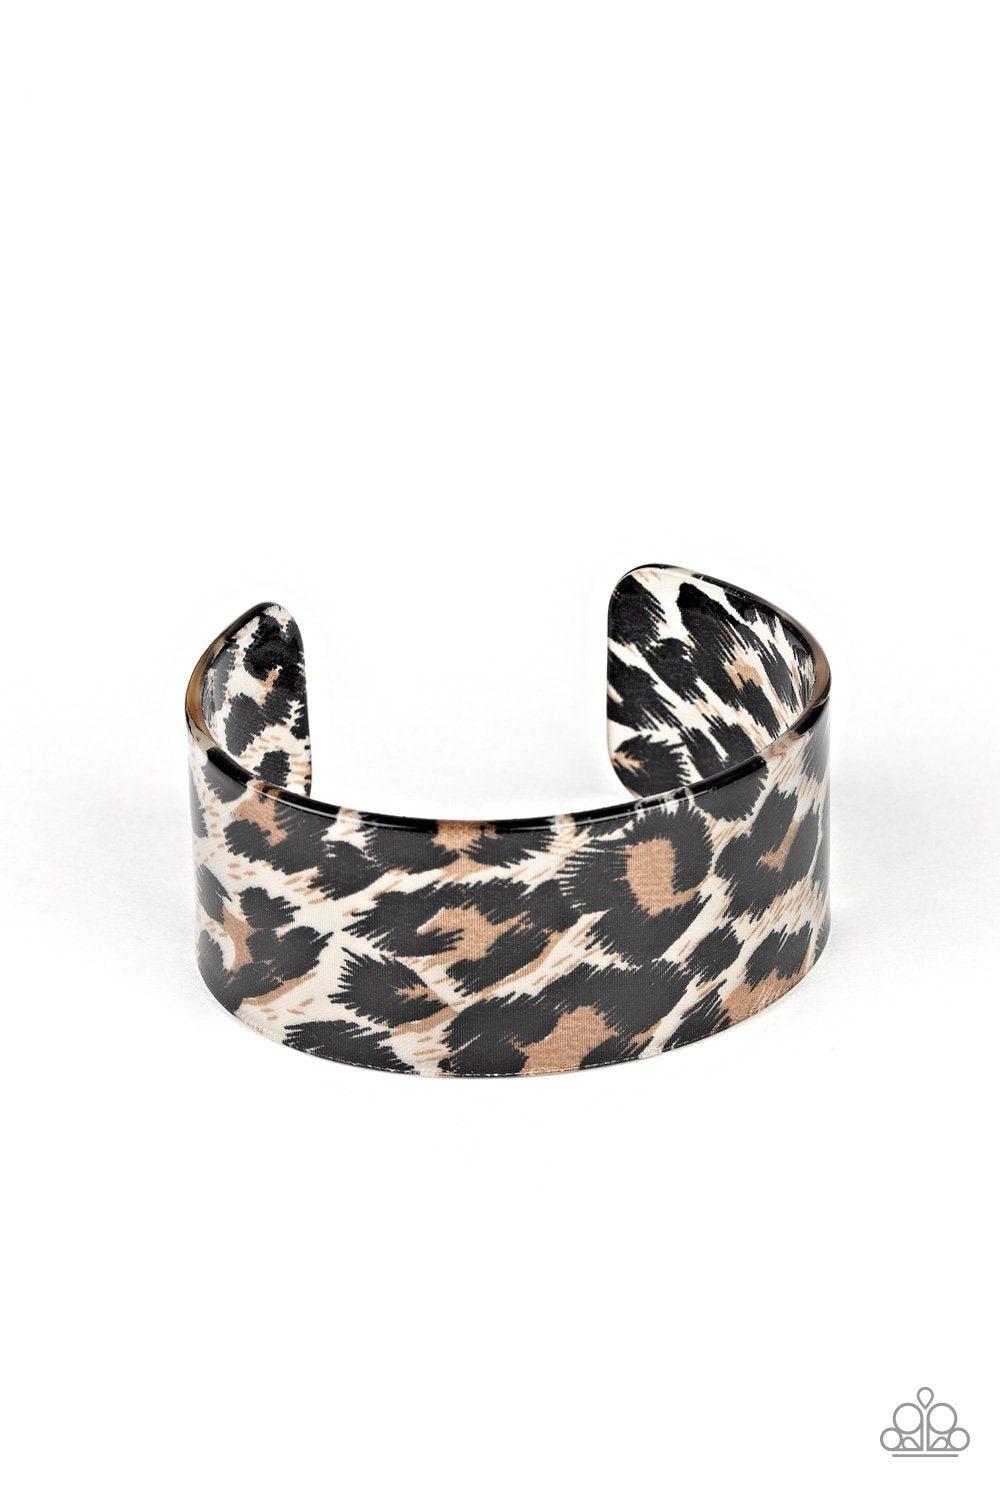 Top Cat Brown Animal Print Acrylic Cuff Bracelet - Paparazzi Accessories-CarasShop.com - $5 Jewelry by Cara Jewels